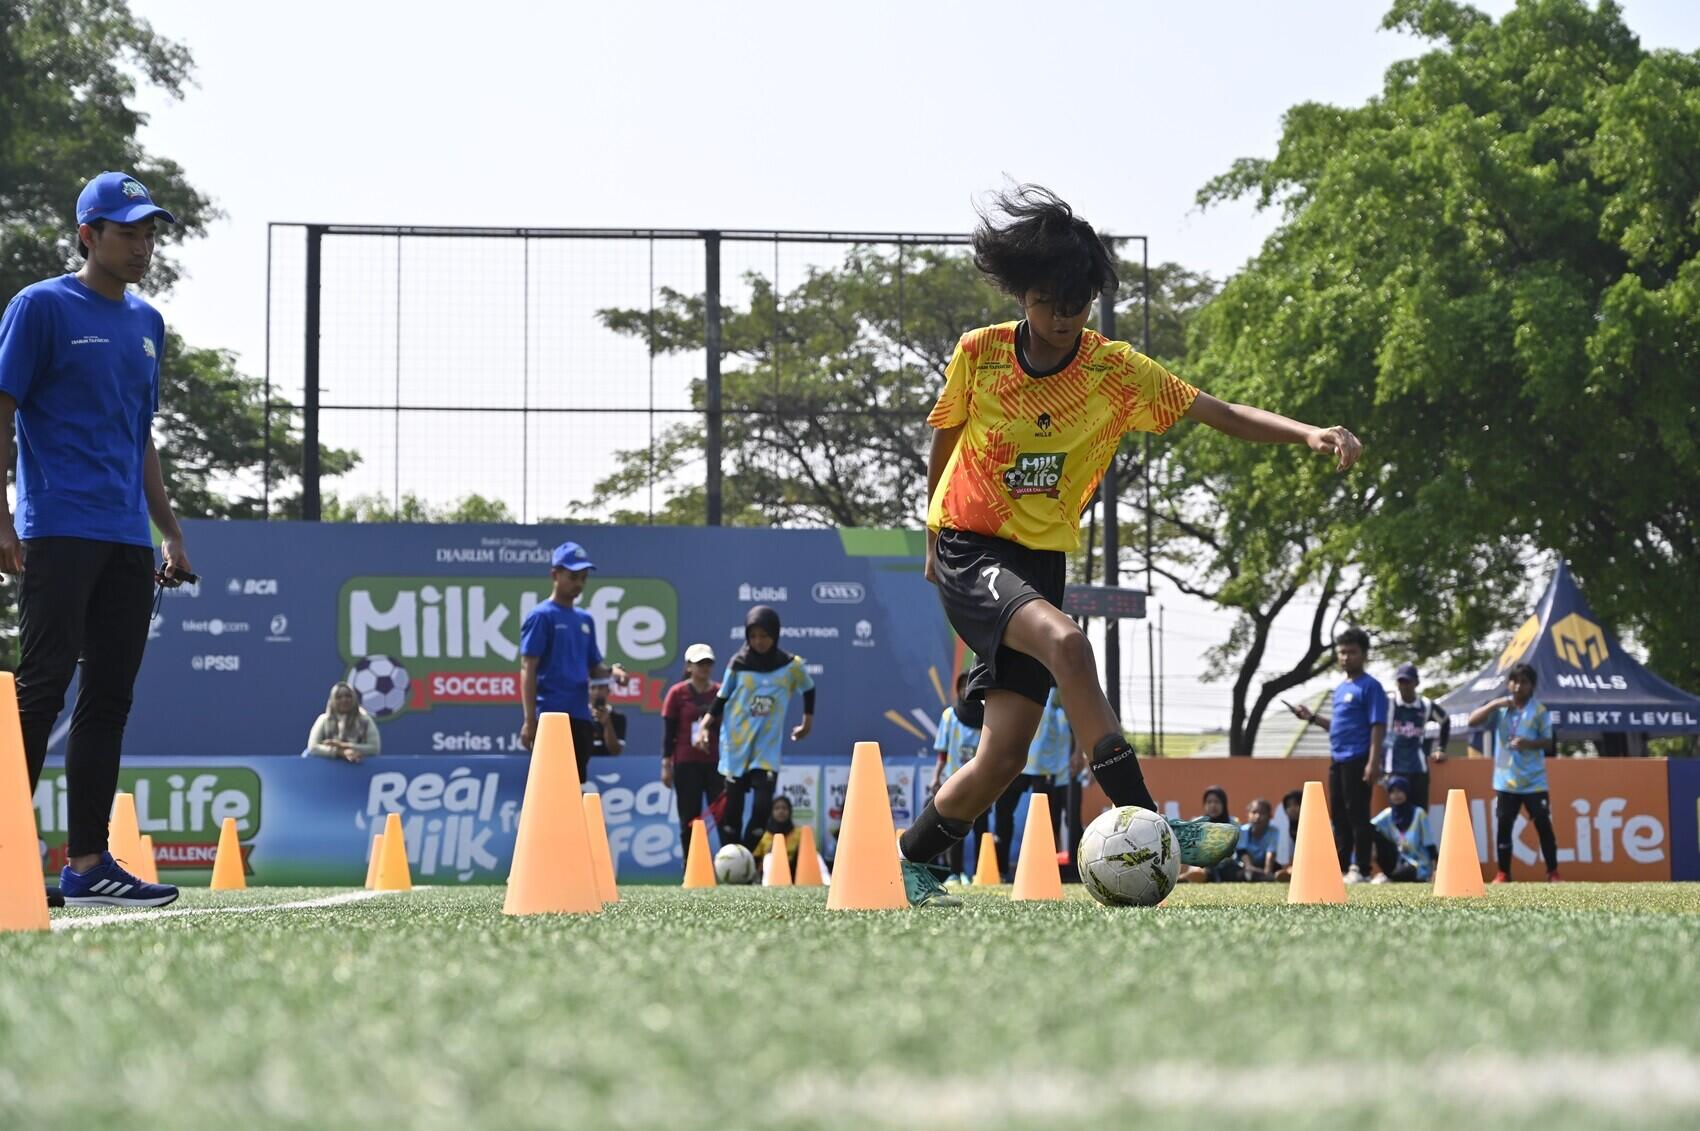 368 Siswi Jakarta Raya beraksi di MilkLife Soccer Challenge